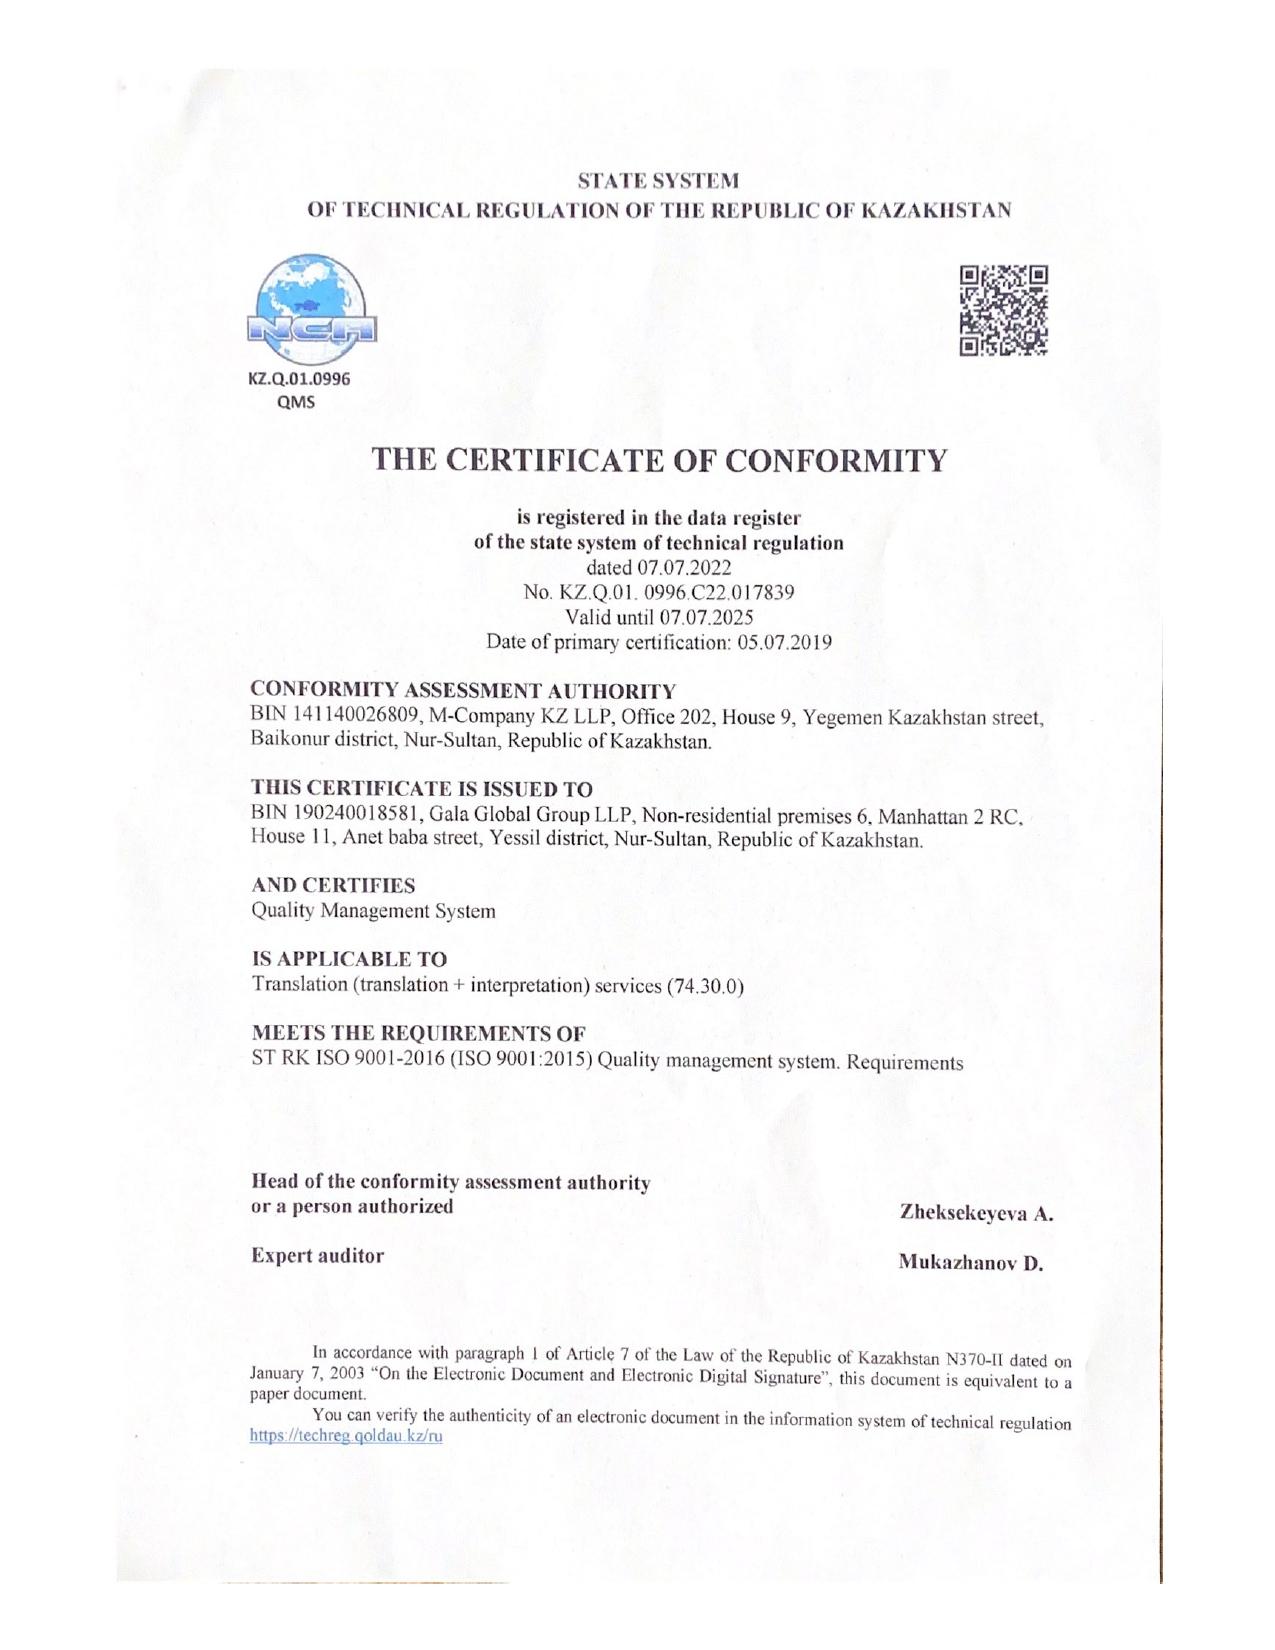 Gala Global Group Kazakhstan ISO9001-2015 certificate ENG